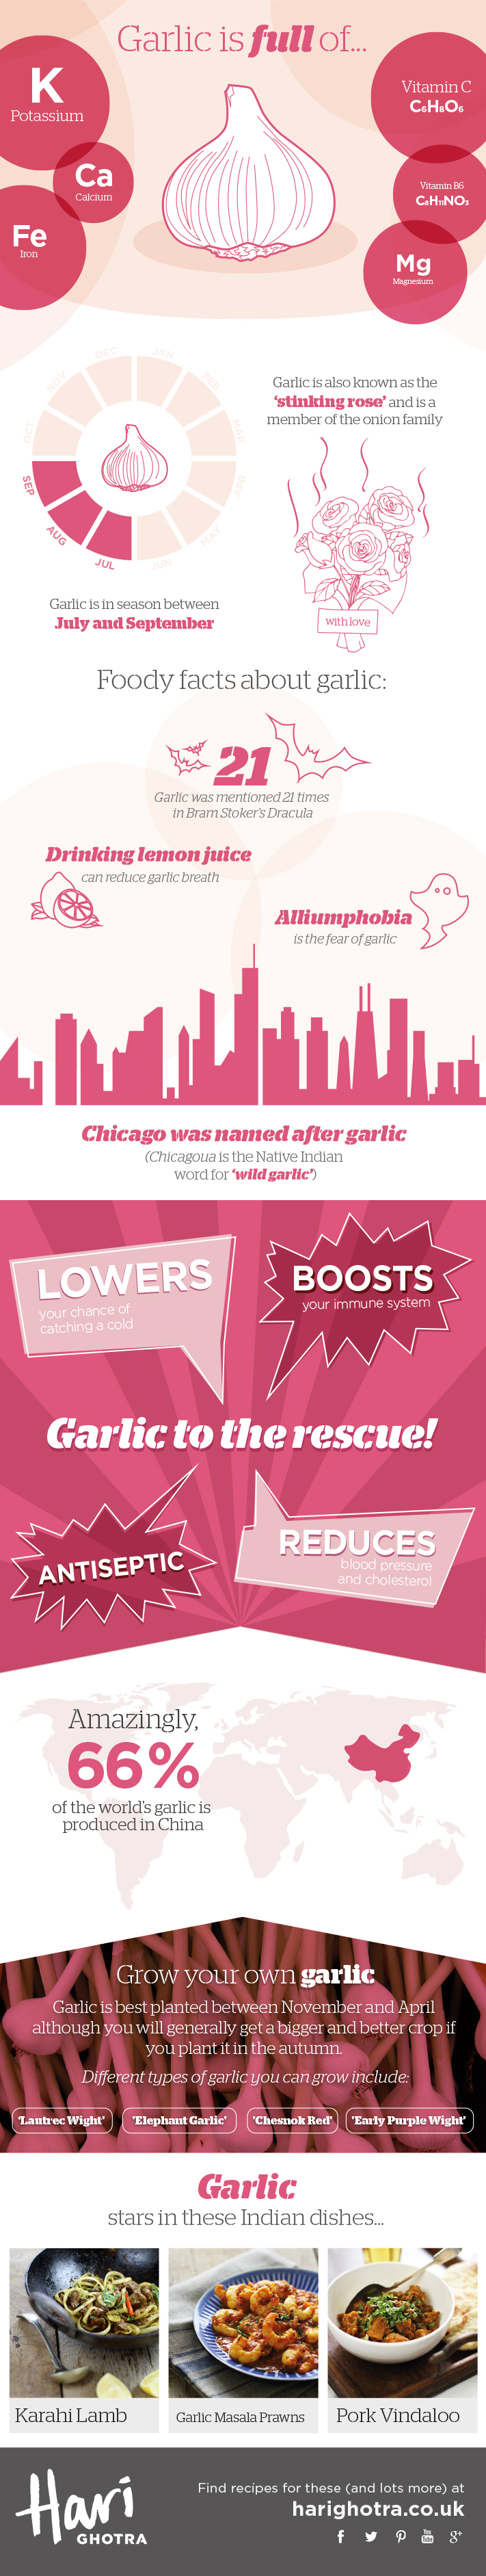 Garlic Infographic showing the health benefits of Garlic